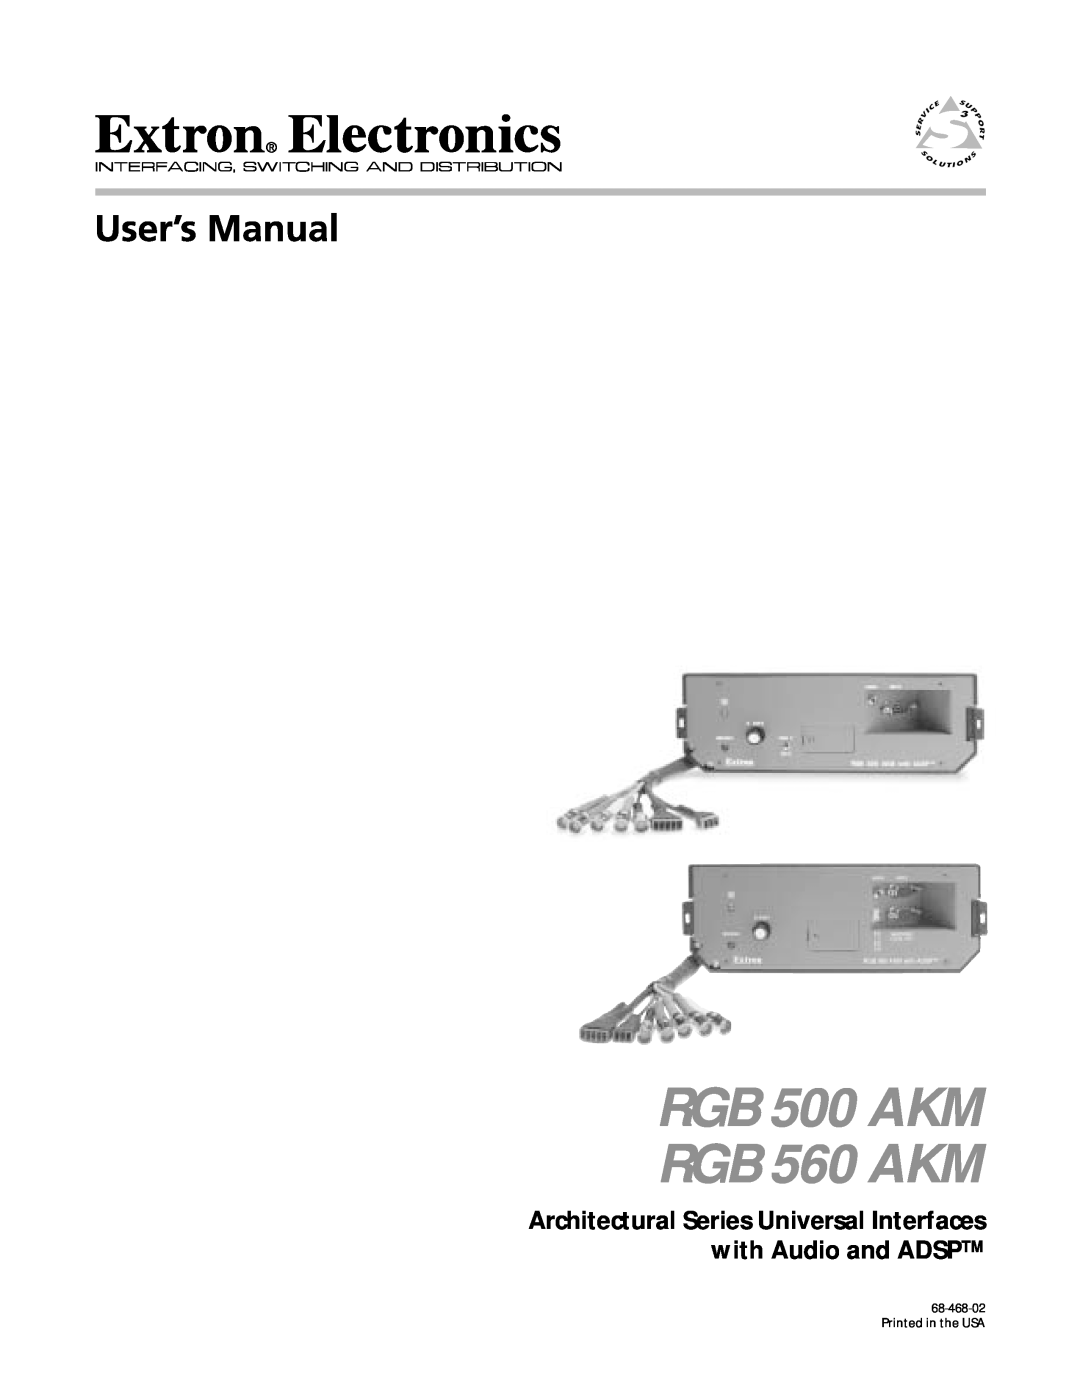 Extron electronic manual RGB 500 AKM AND RGB 560 AKM, Active audio interfacing, kHz compatibility 